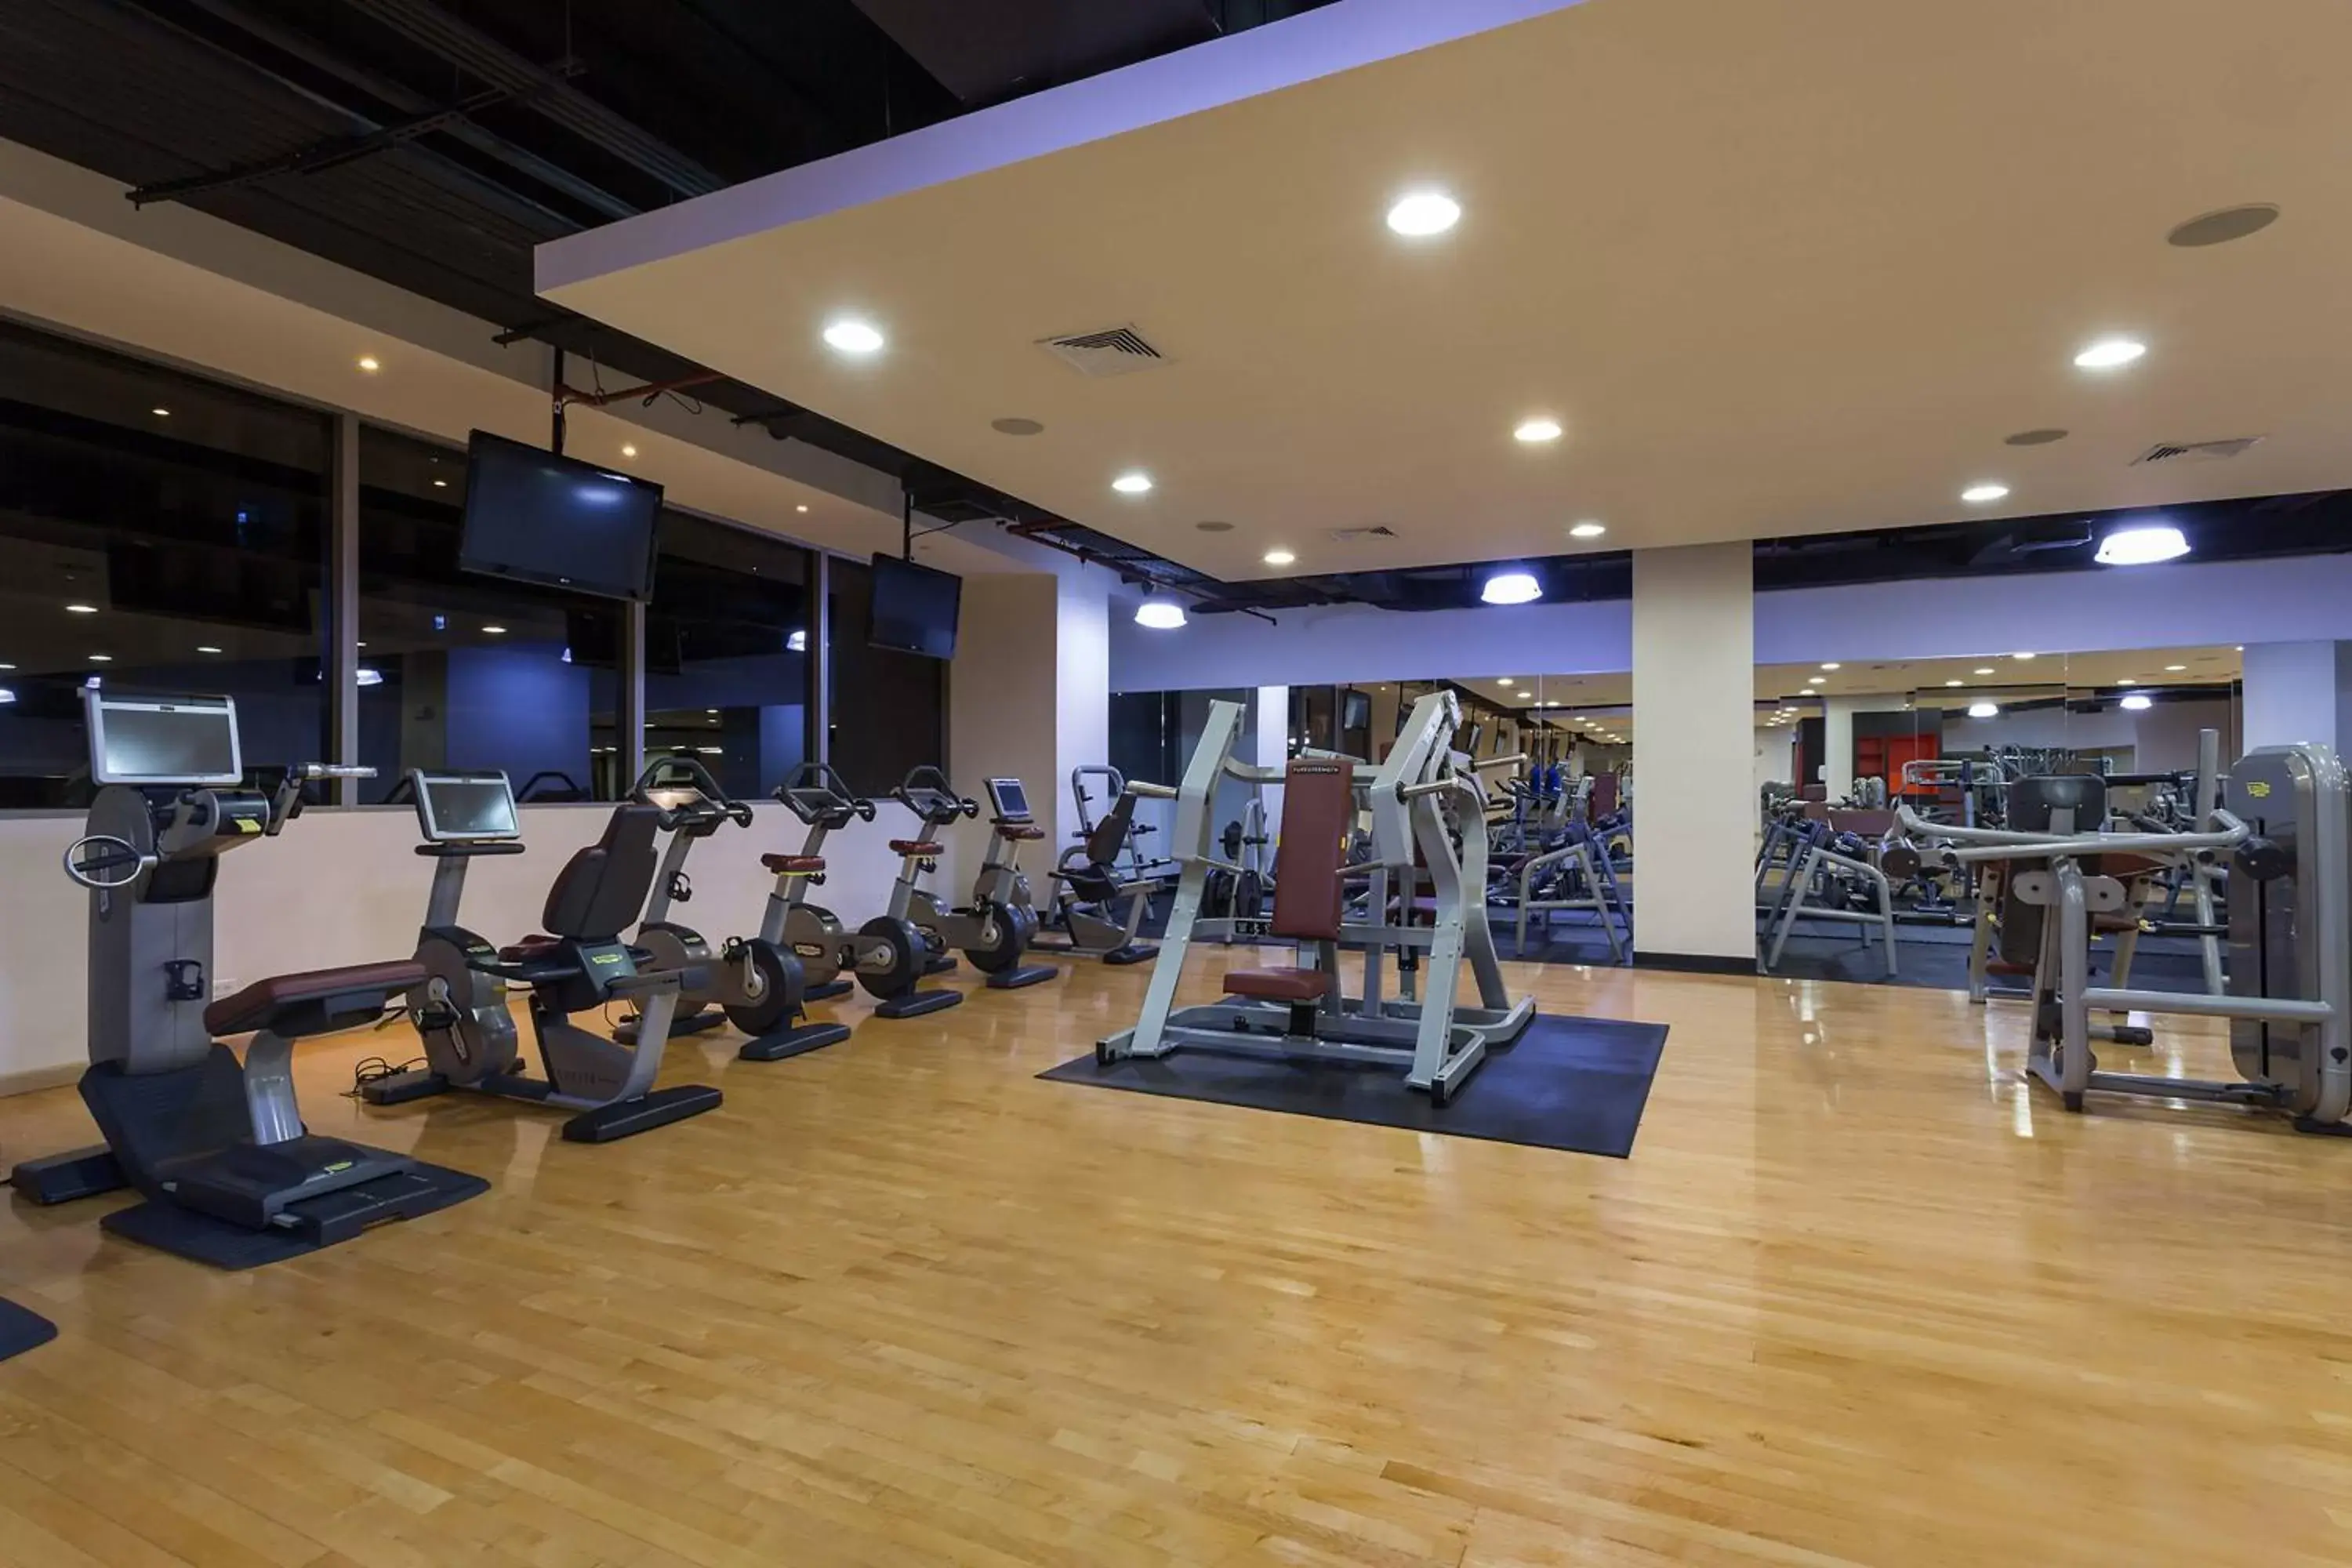 Fitness centre/facilities, Fitness Center/Facilities in JW Marriott Panama